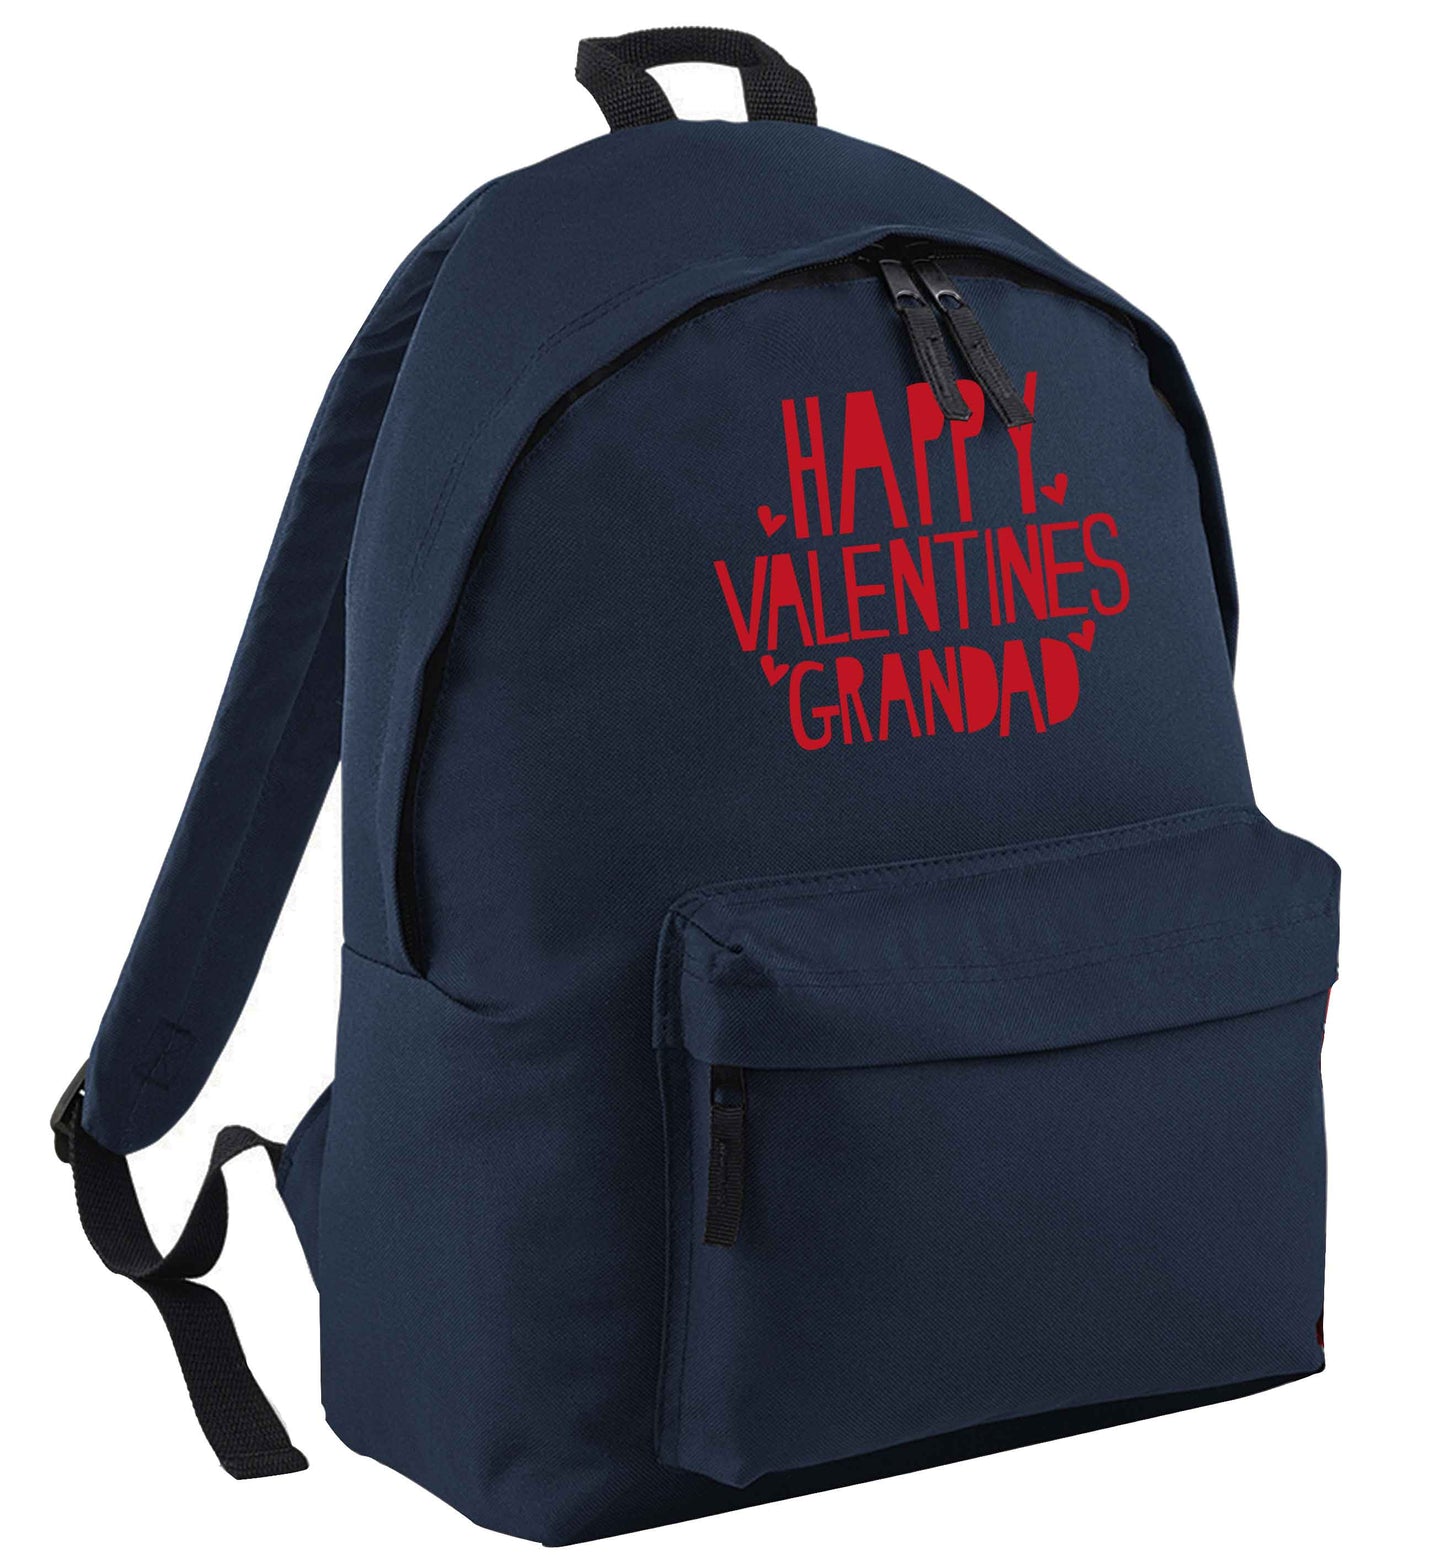 Happy valentines grandad navy childrens backpack